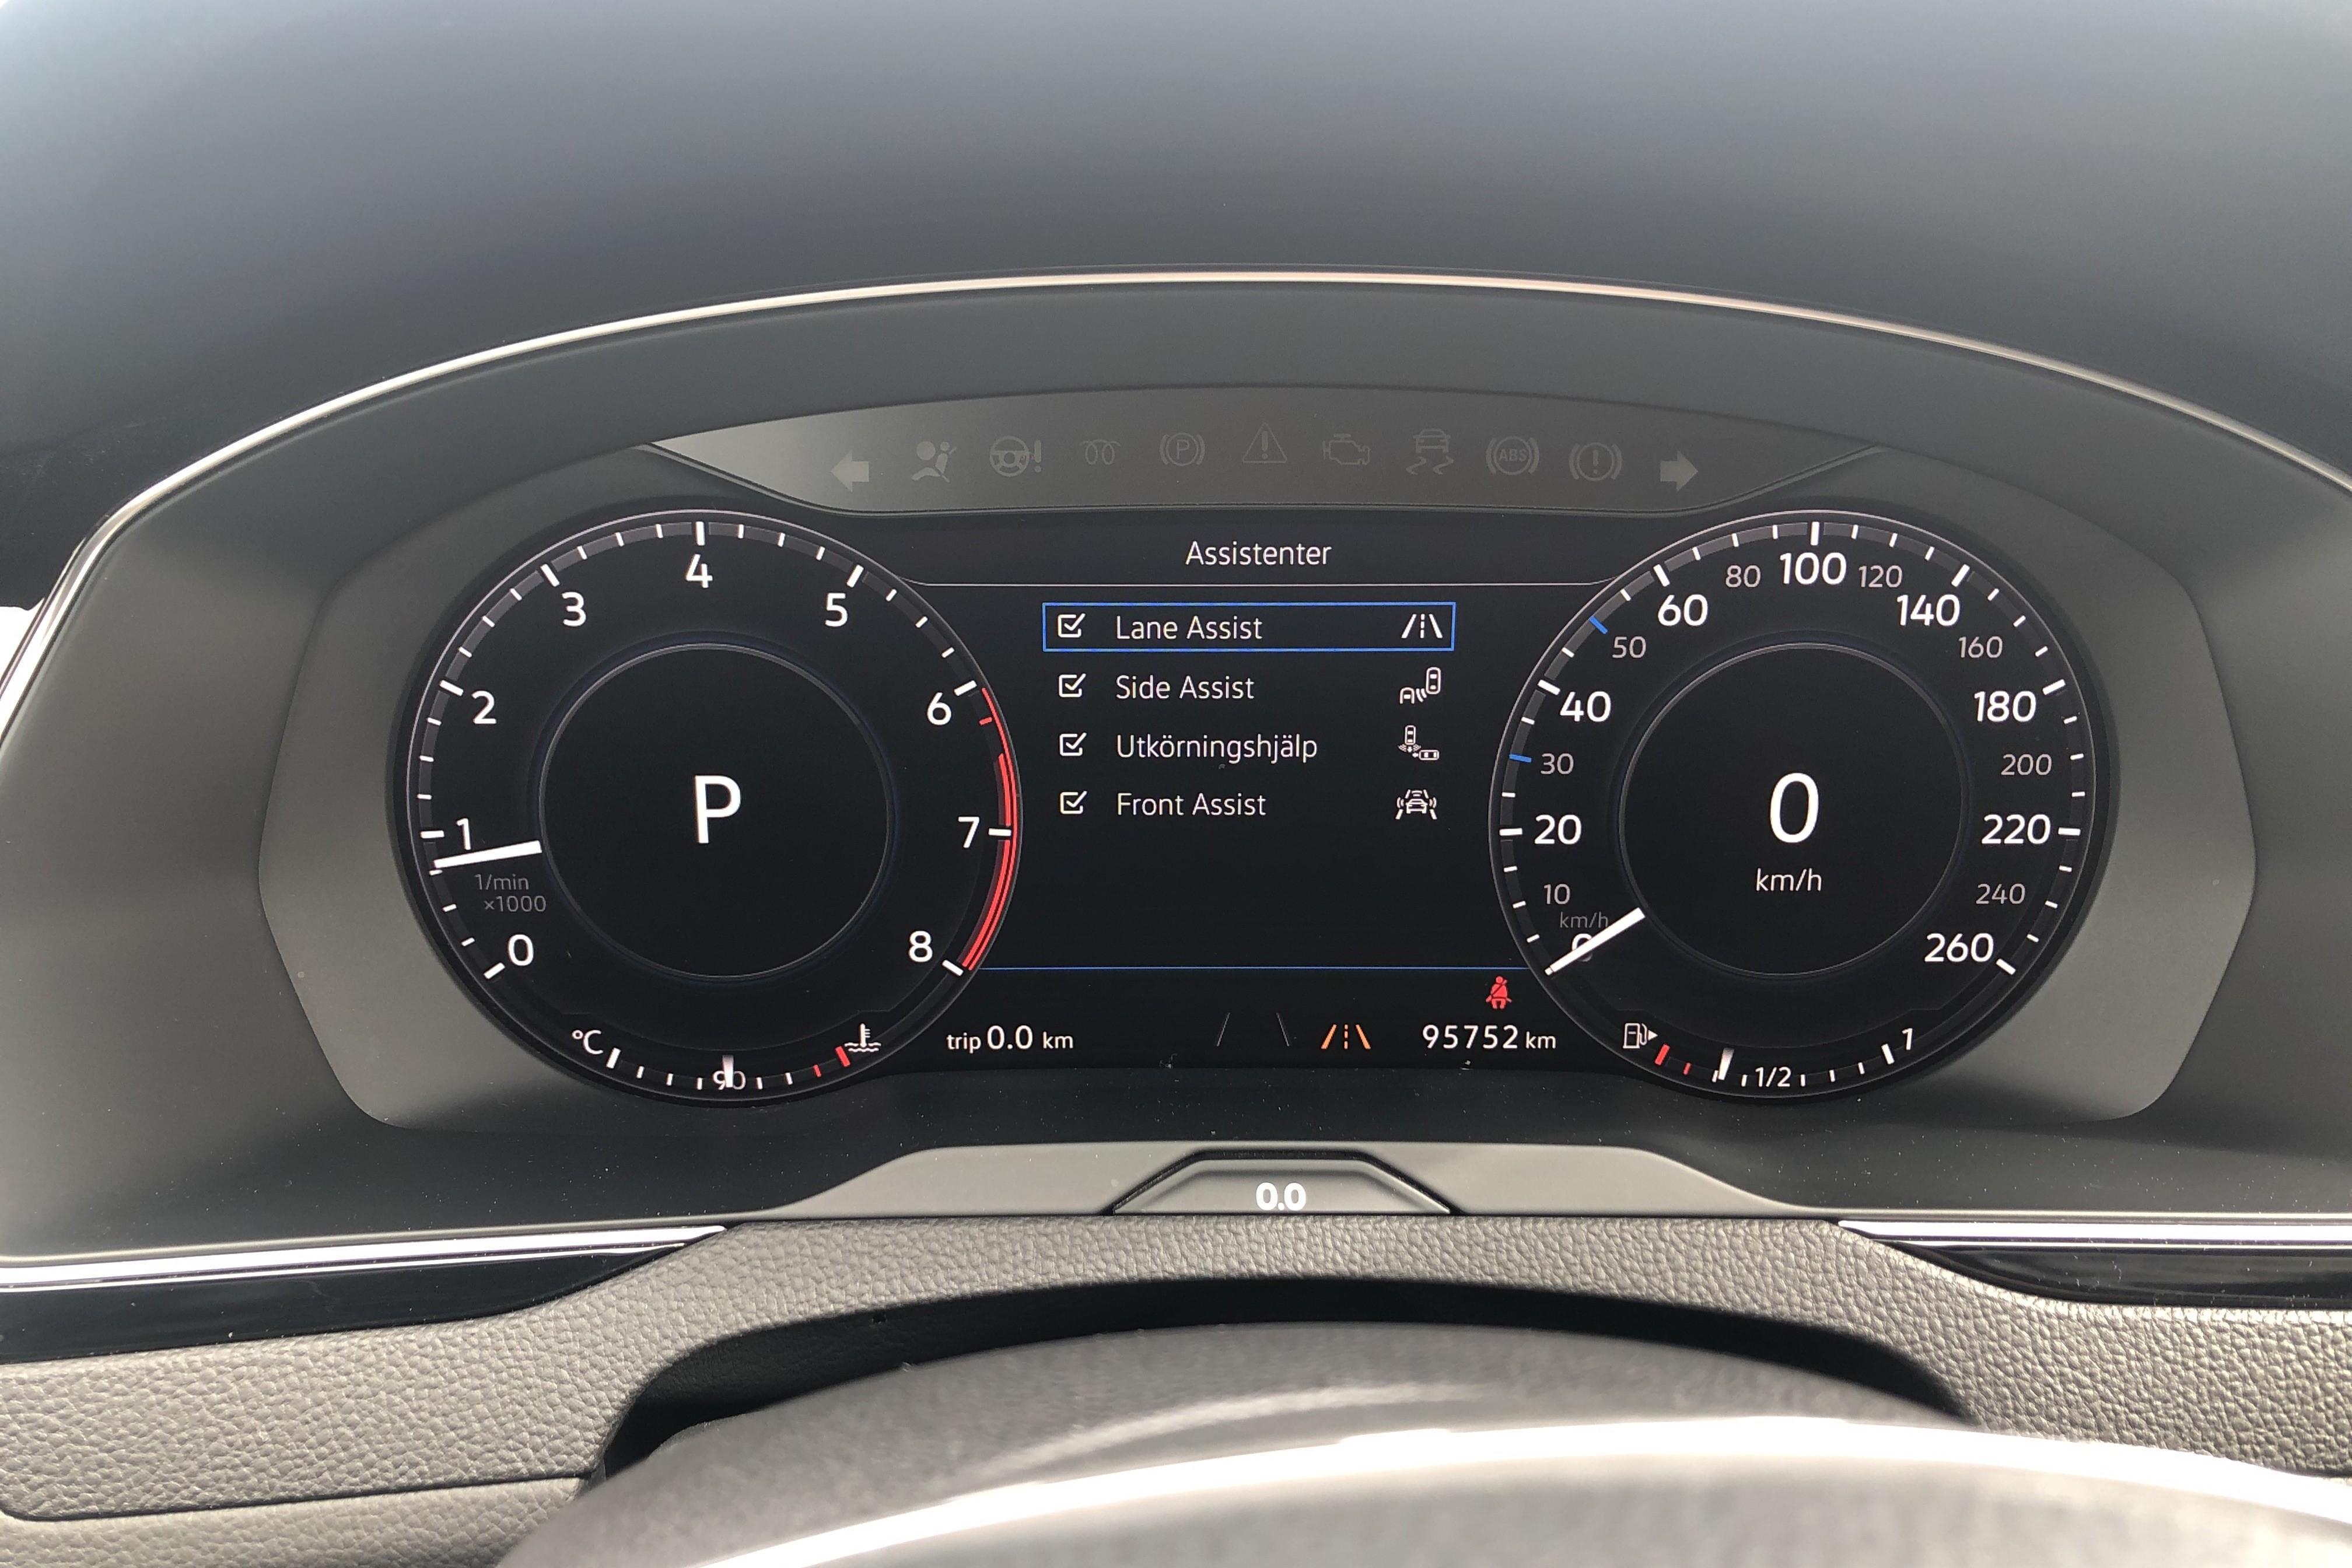 VW Passat 2.0 TFSI Sportscombi (220hk) - 9 575 mil - Automat - svart - 2018